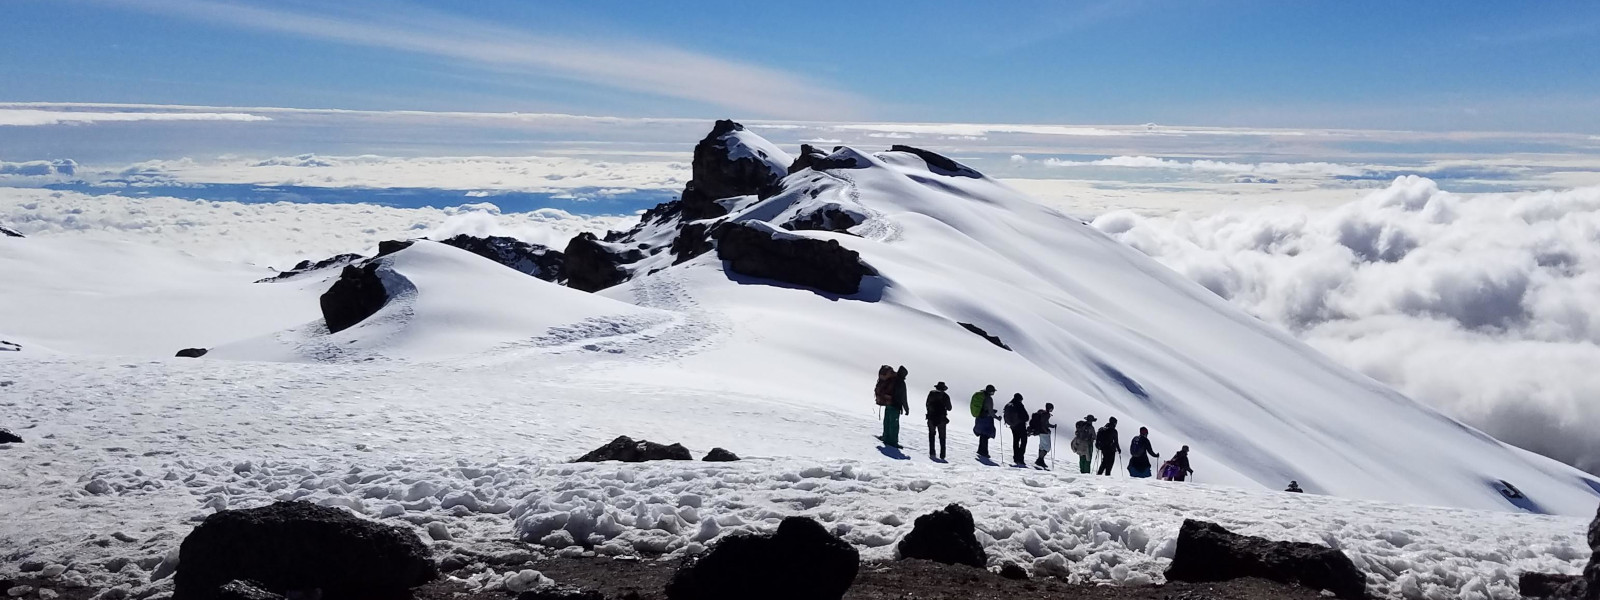 Rongai Route Mt. Kilimanjaro